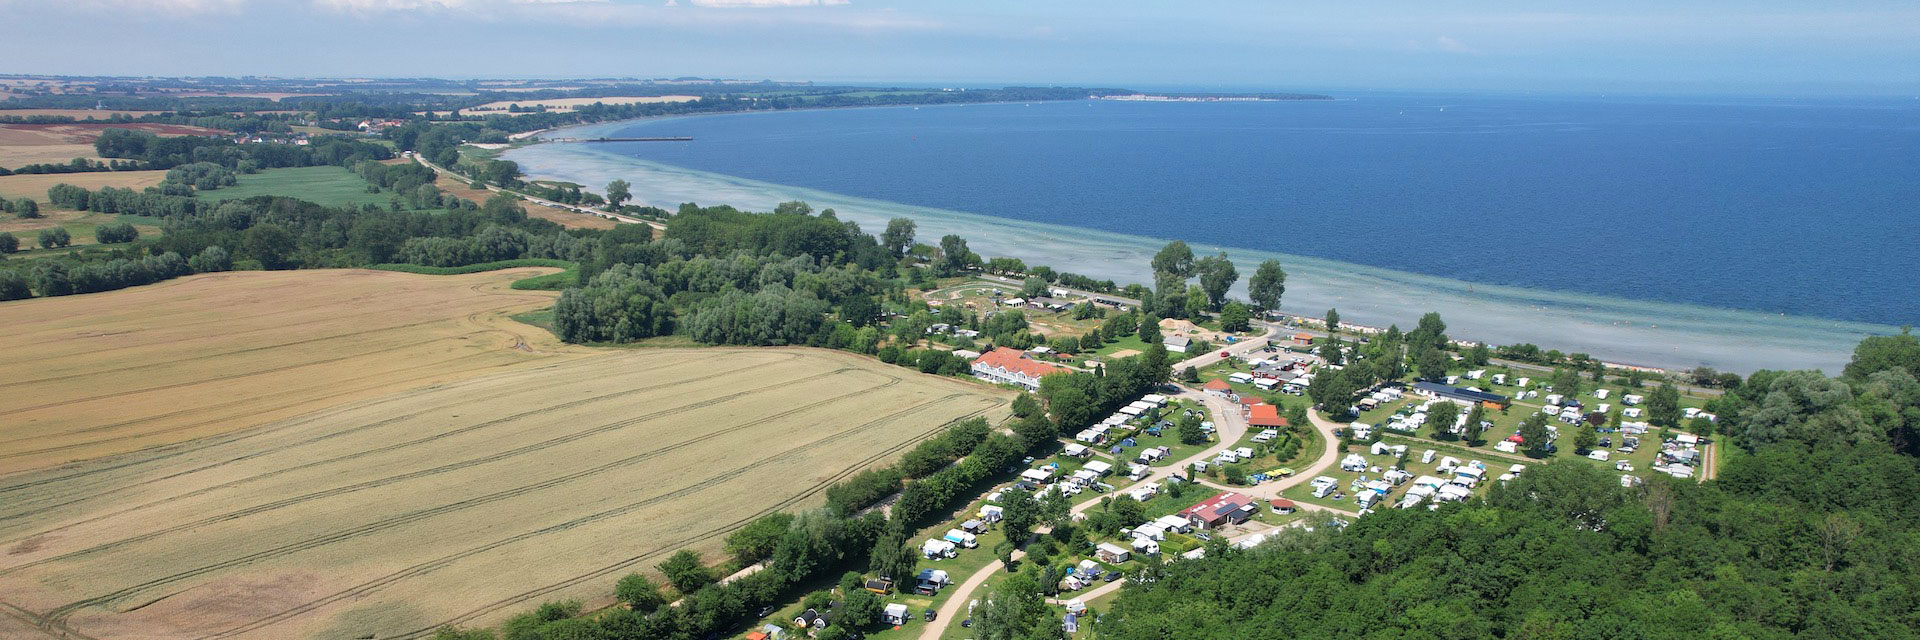 Luftbild Boltenhagen - Campingplatz Ostseequelle